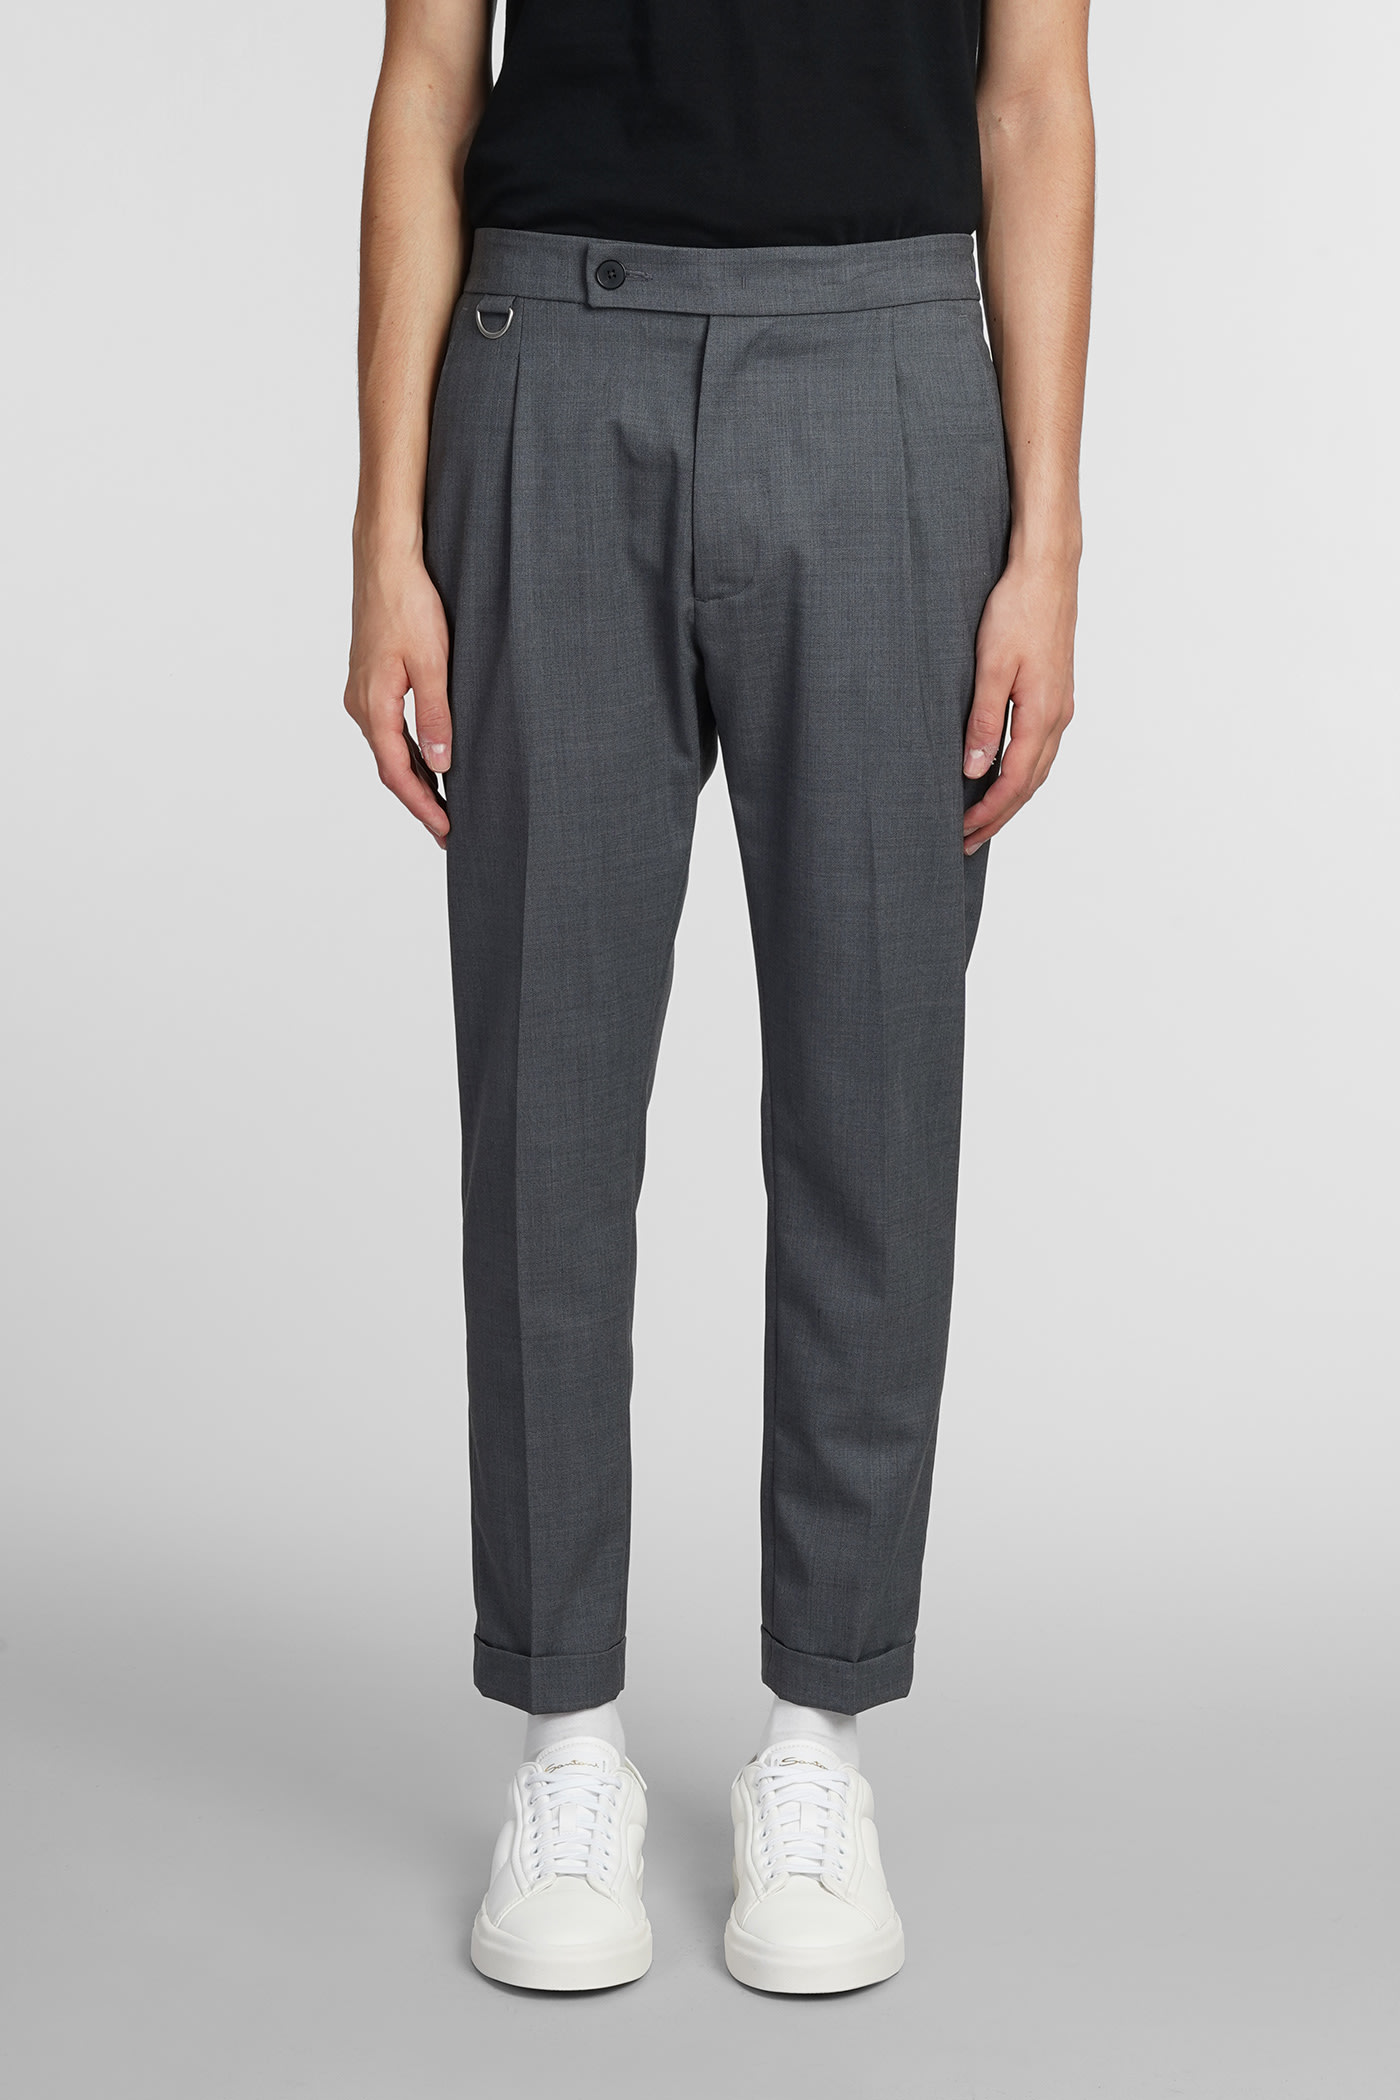 Low Brand Riviera Pants In Grey Wool